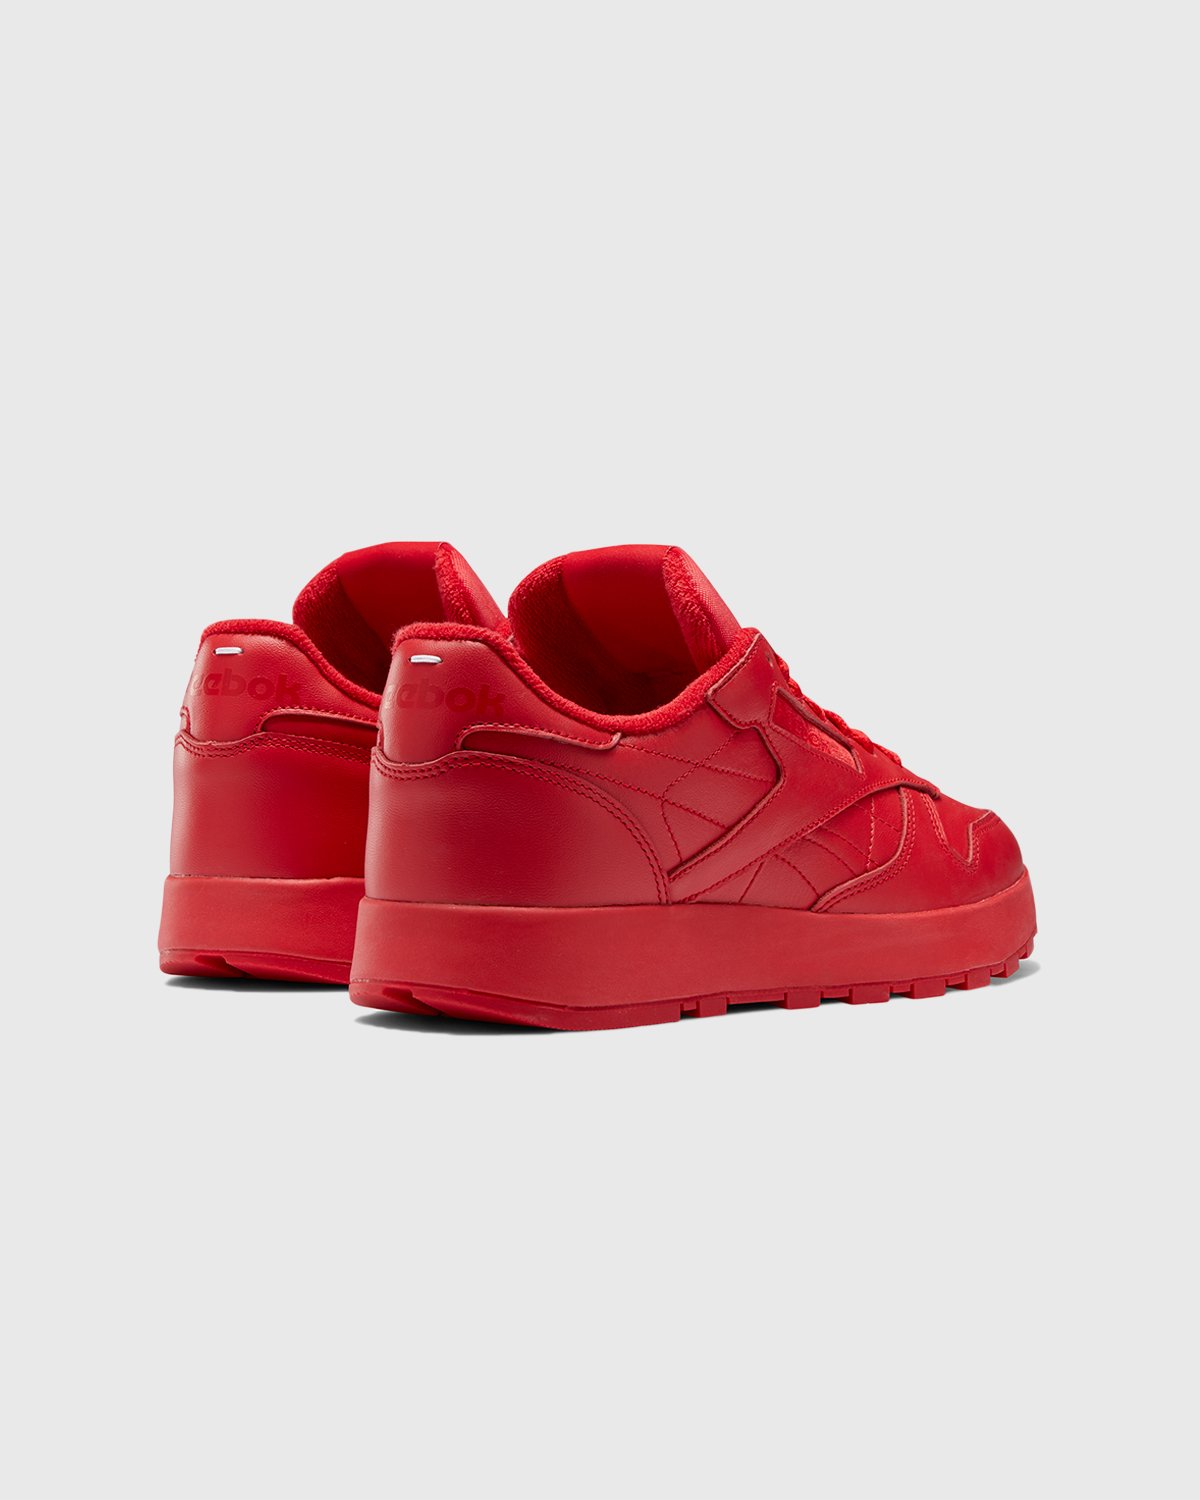 Maison Margiela x Reebok - Classic Leather Tabi Red - Footwear - Red - Image 3